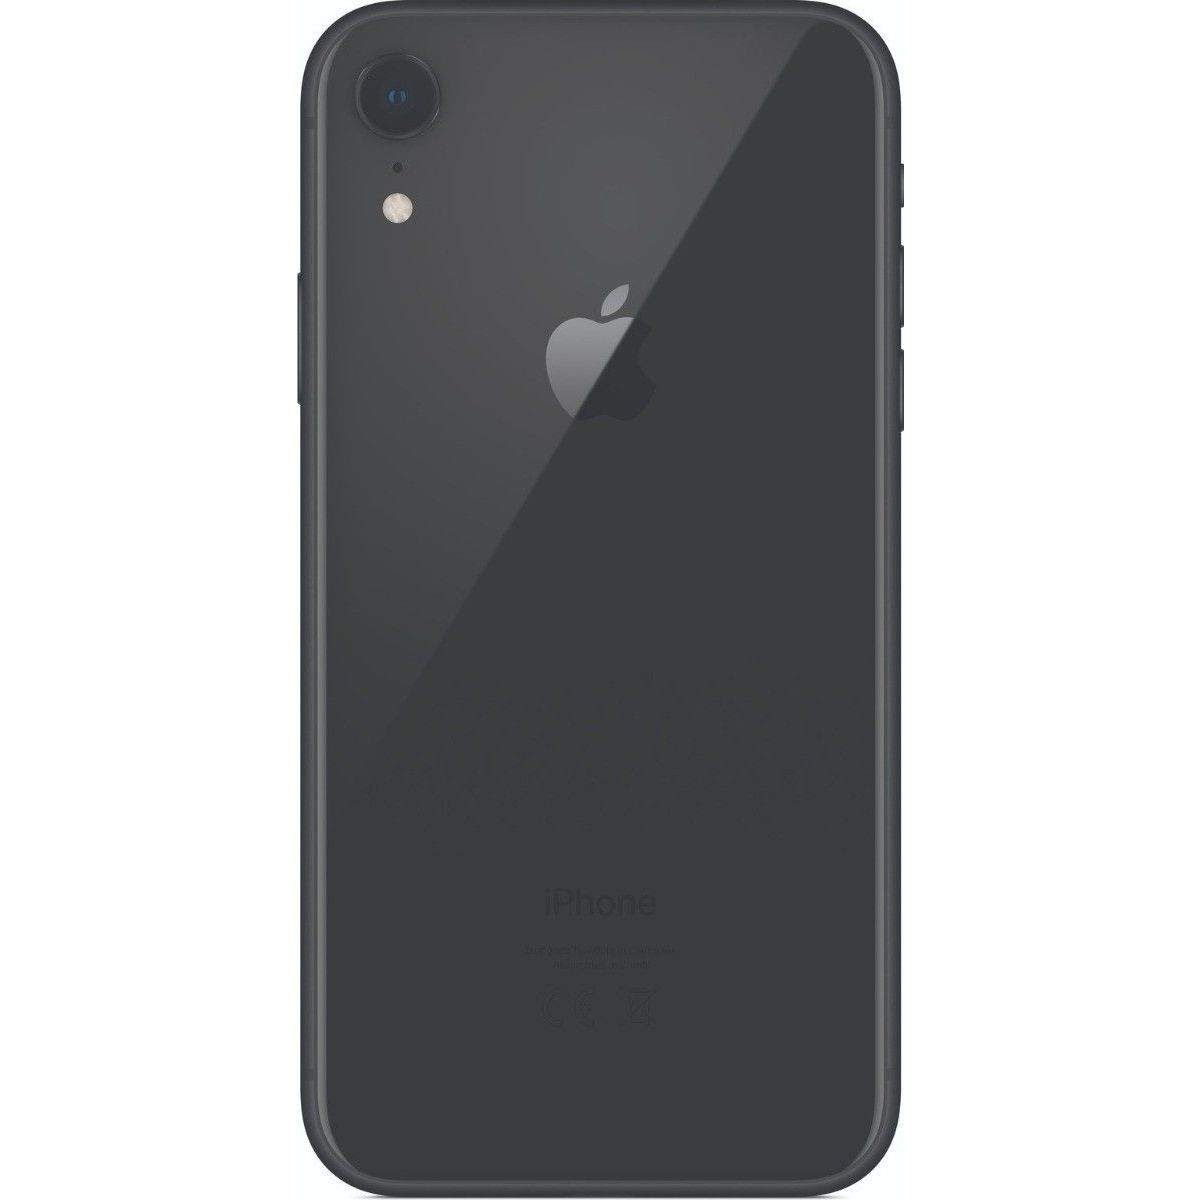 iPhone XR 64GB Space Grey bestel online bij QX Systems